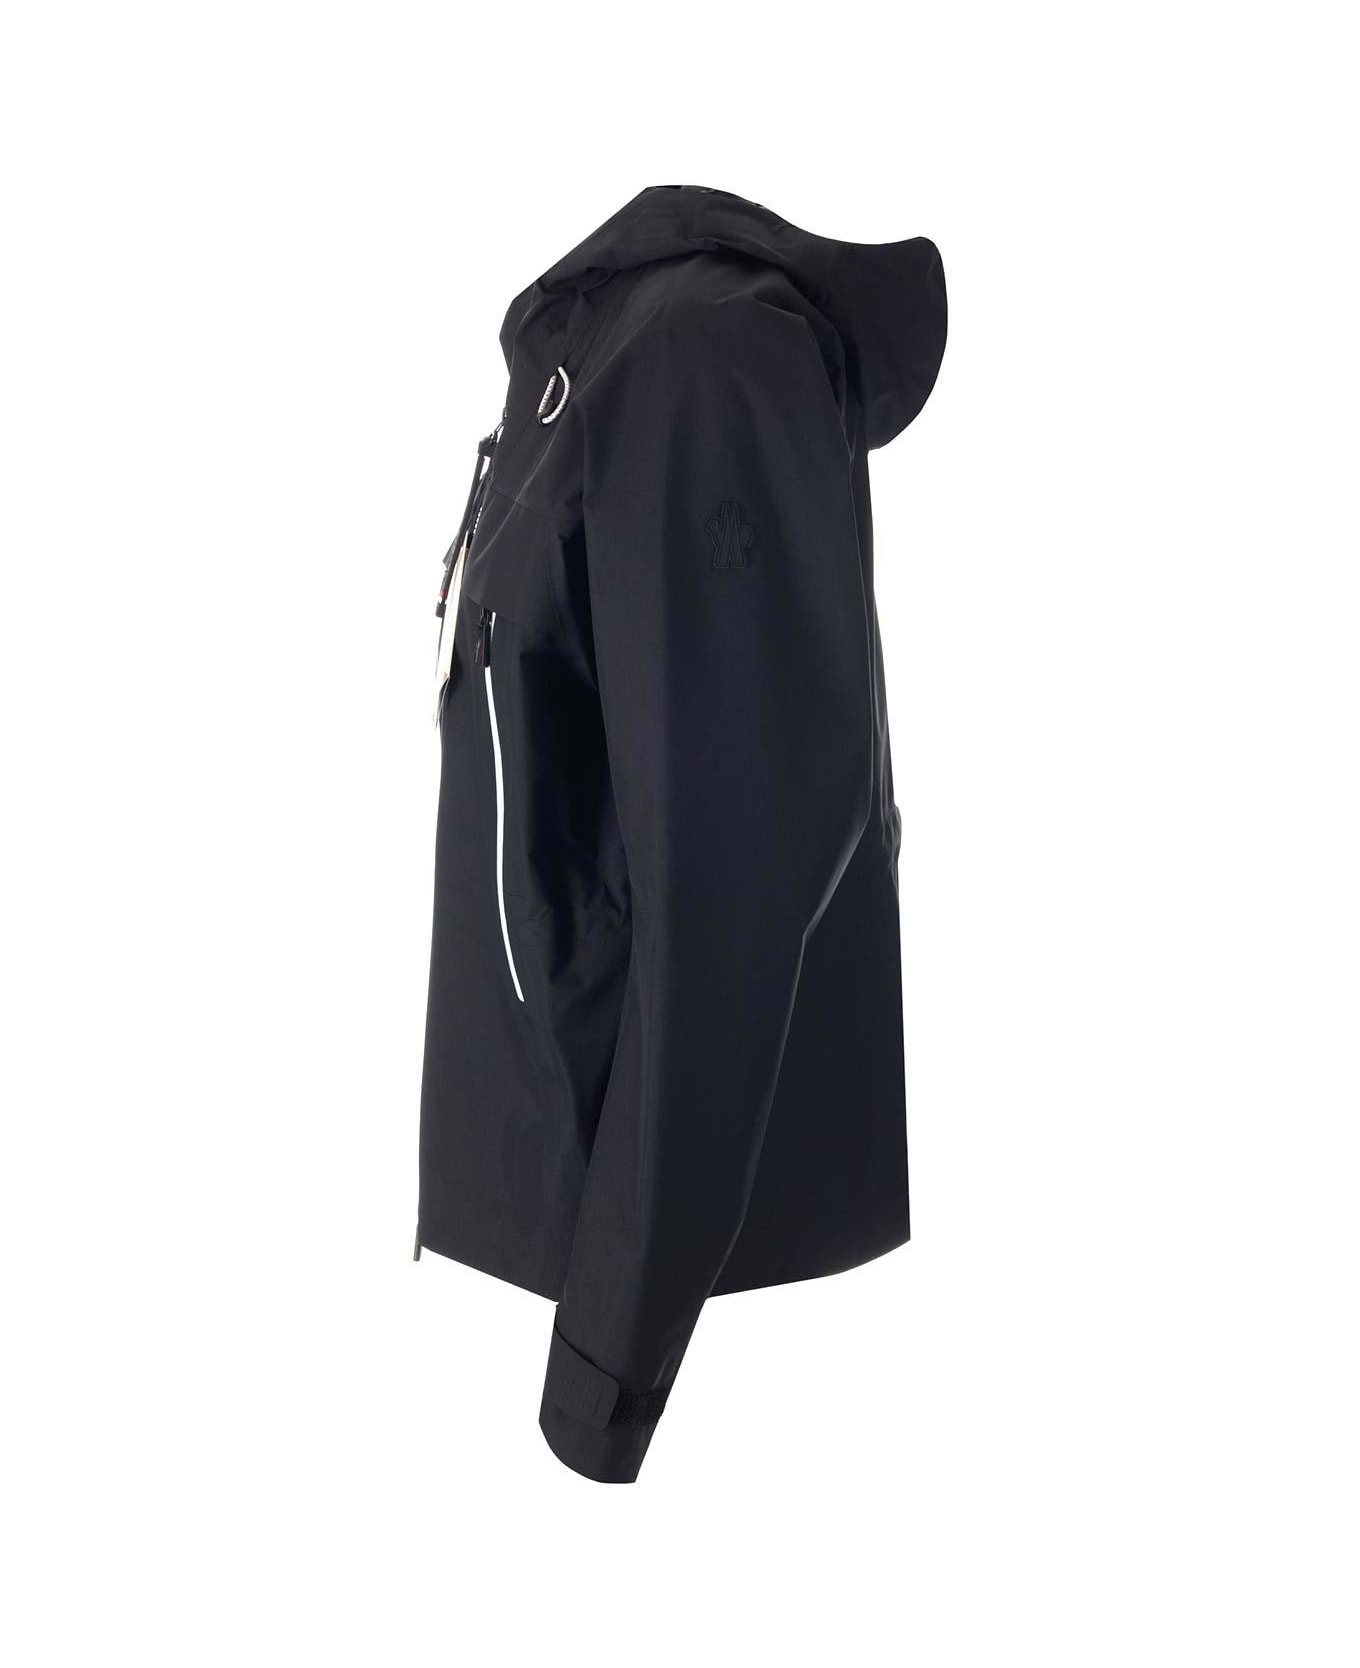 Moncler Grenoble Zip-up Hooded Jacket - Black ジャケット